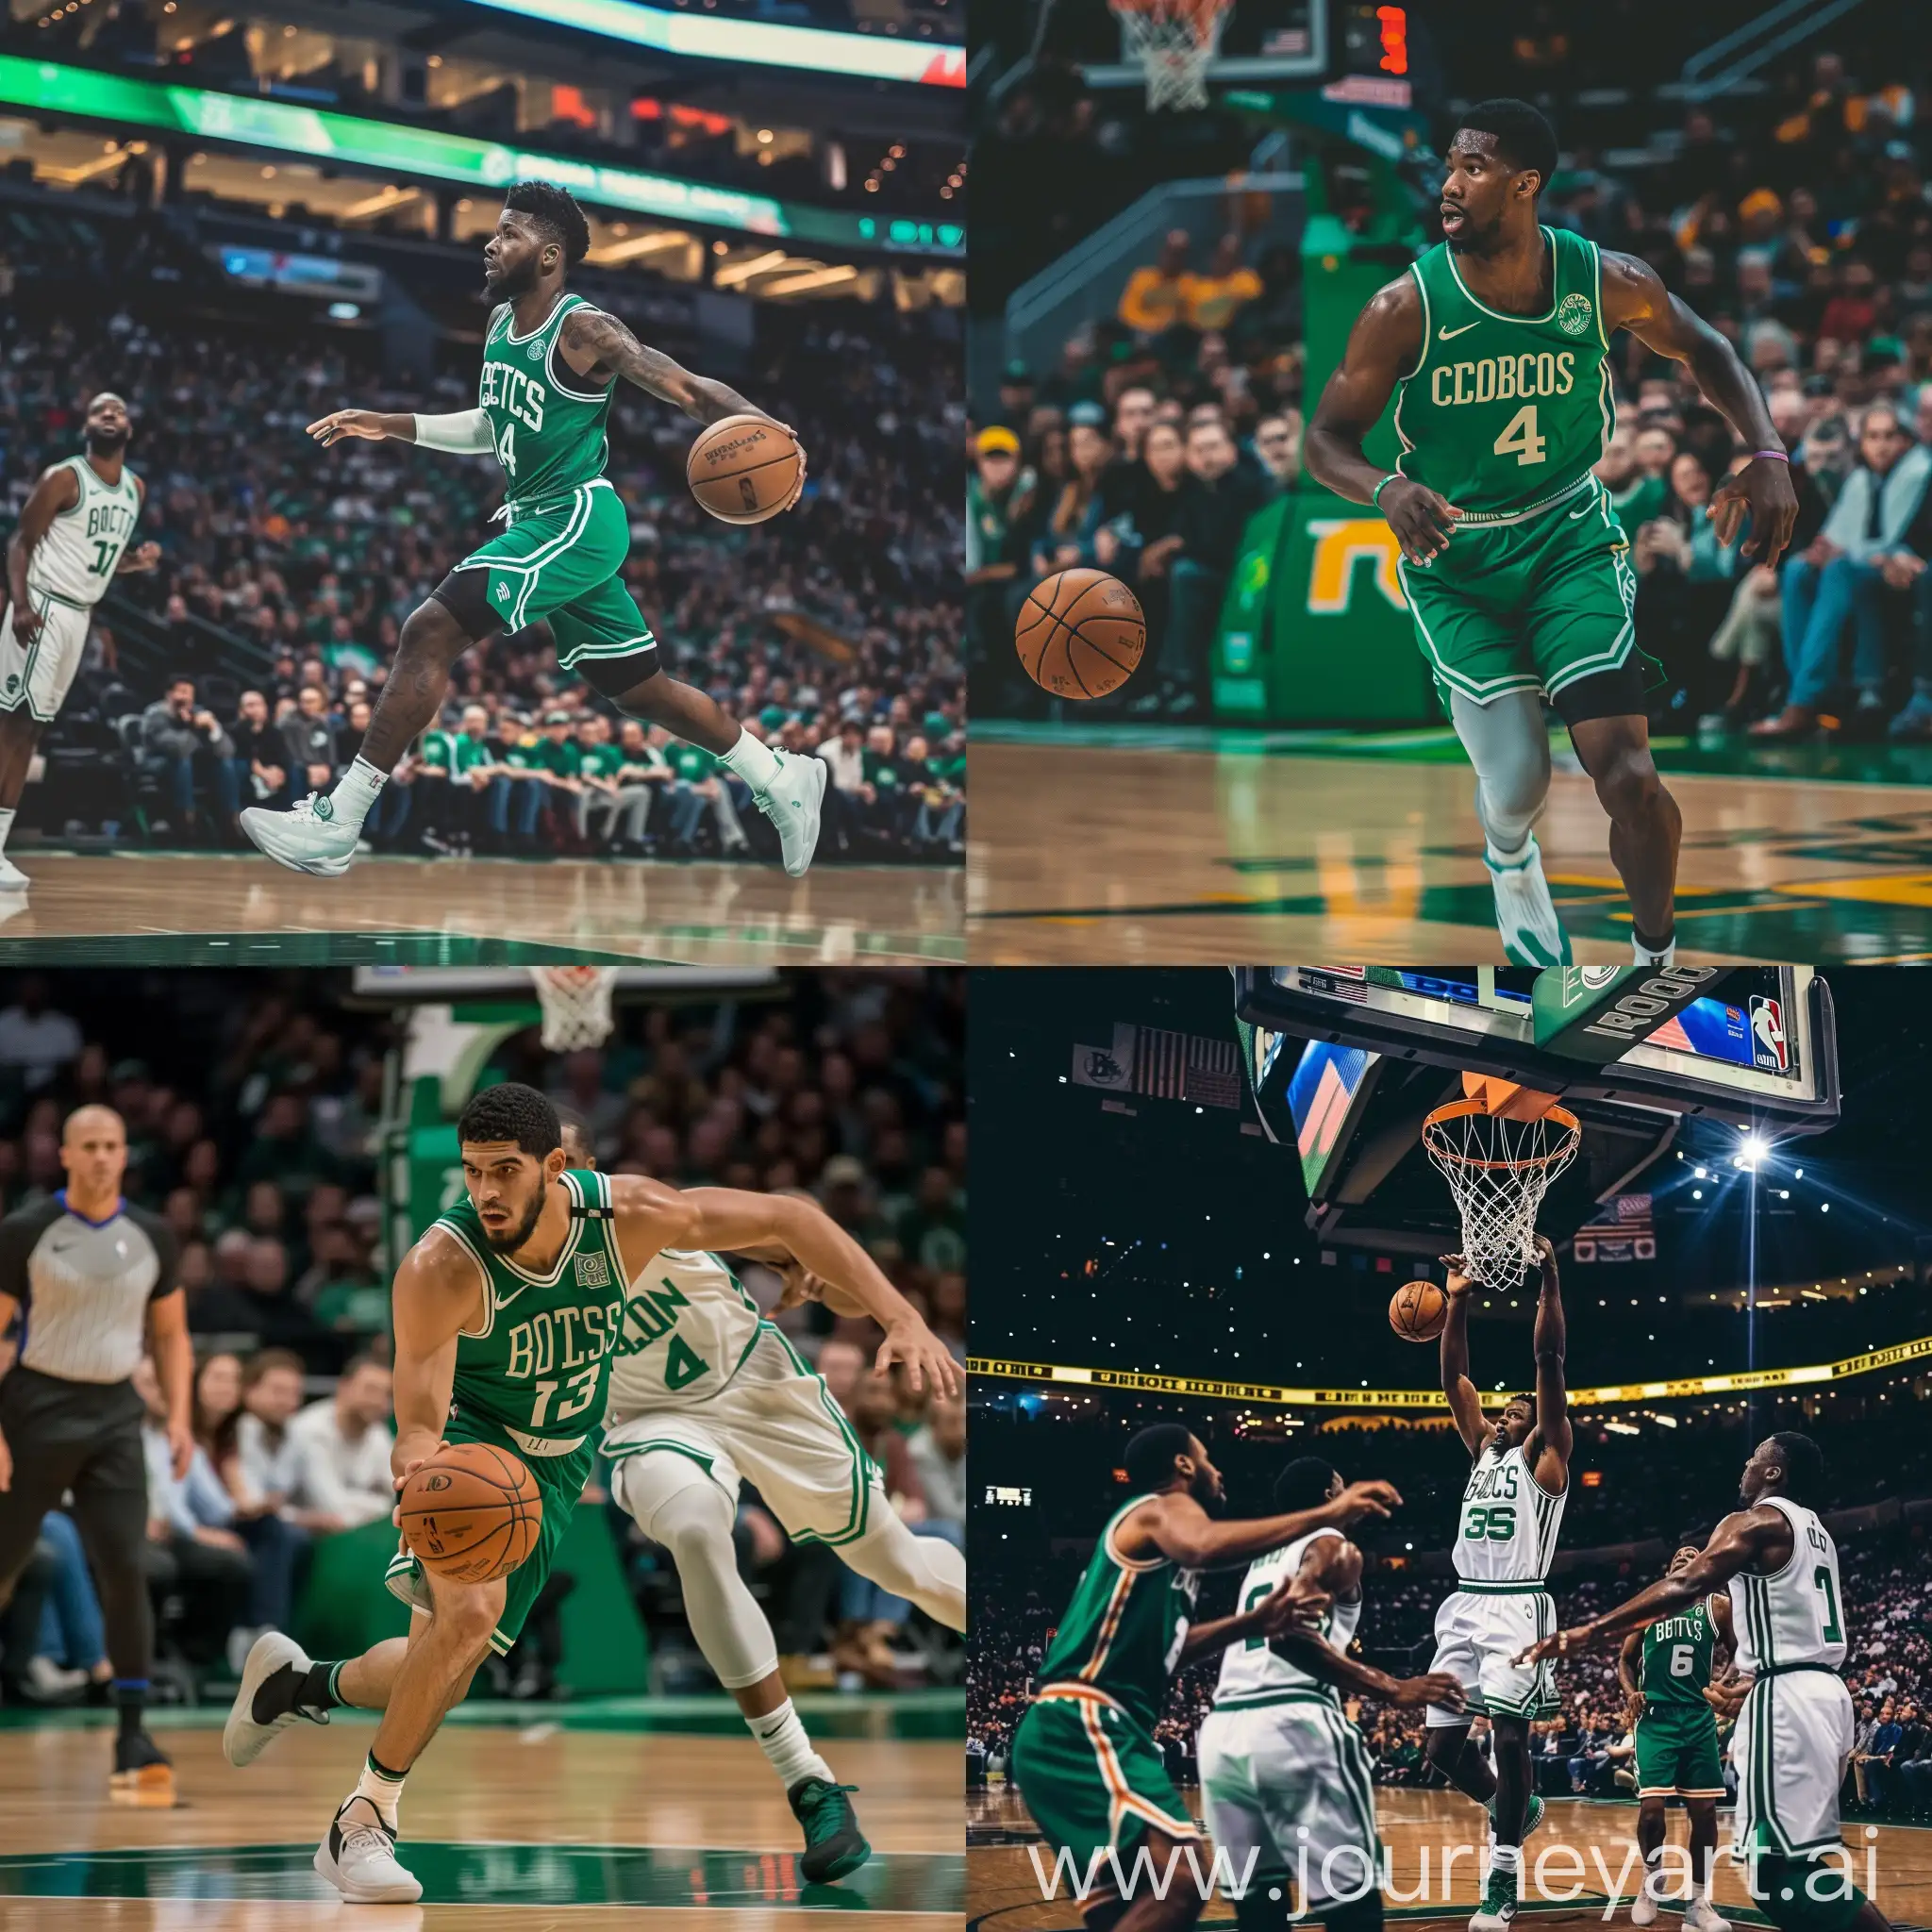 Boston-Celtics-Basketball-Action-Vibrant-Square-Image